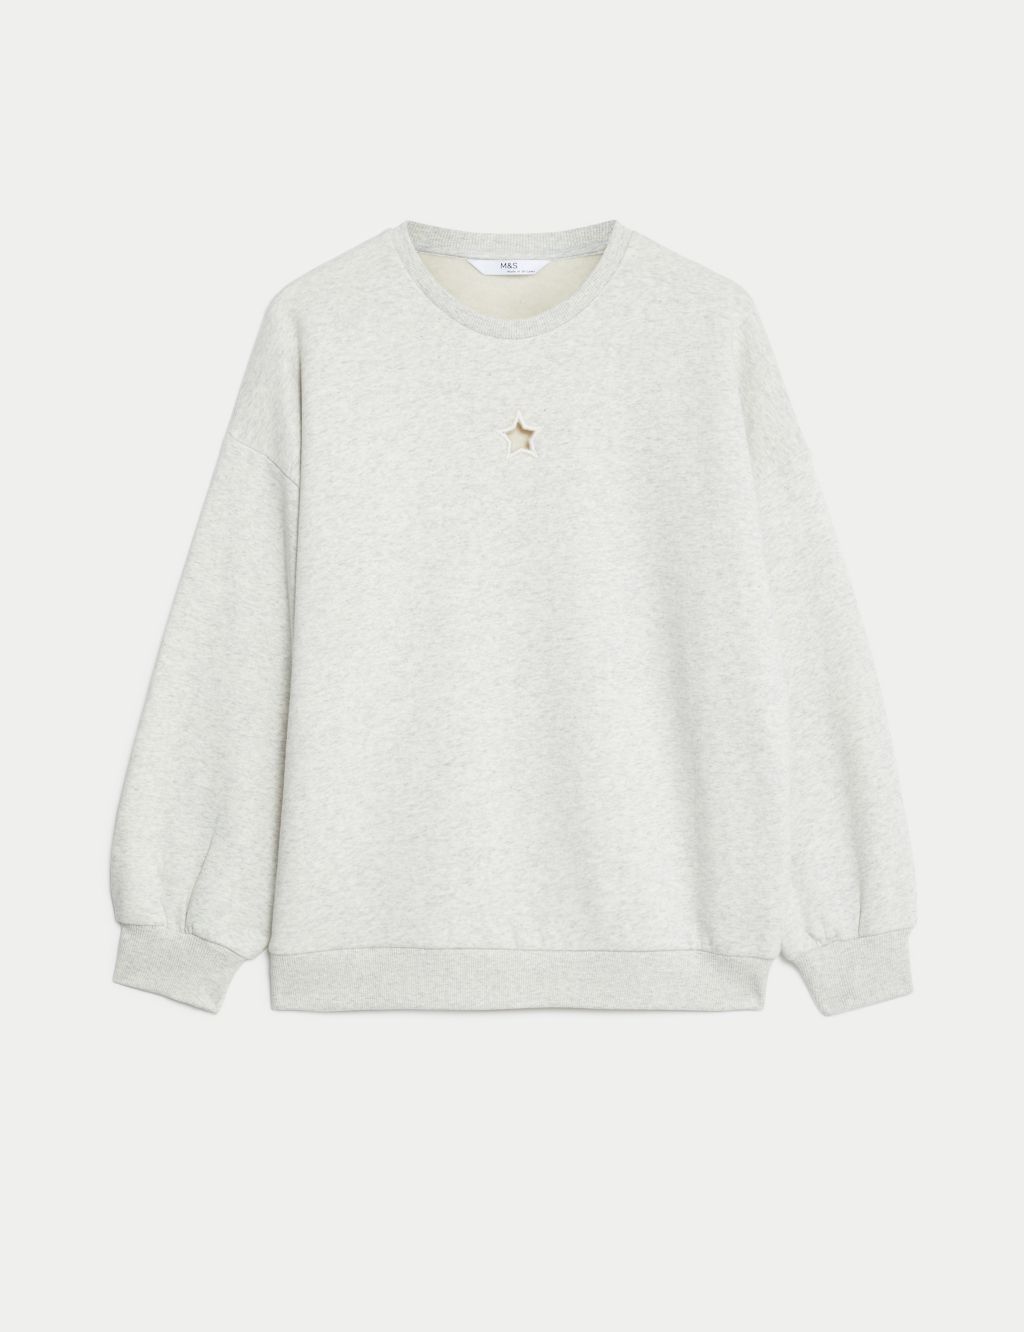 Cotton Rich Star Sweatshirt (6-16 Yrs) image 2